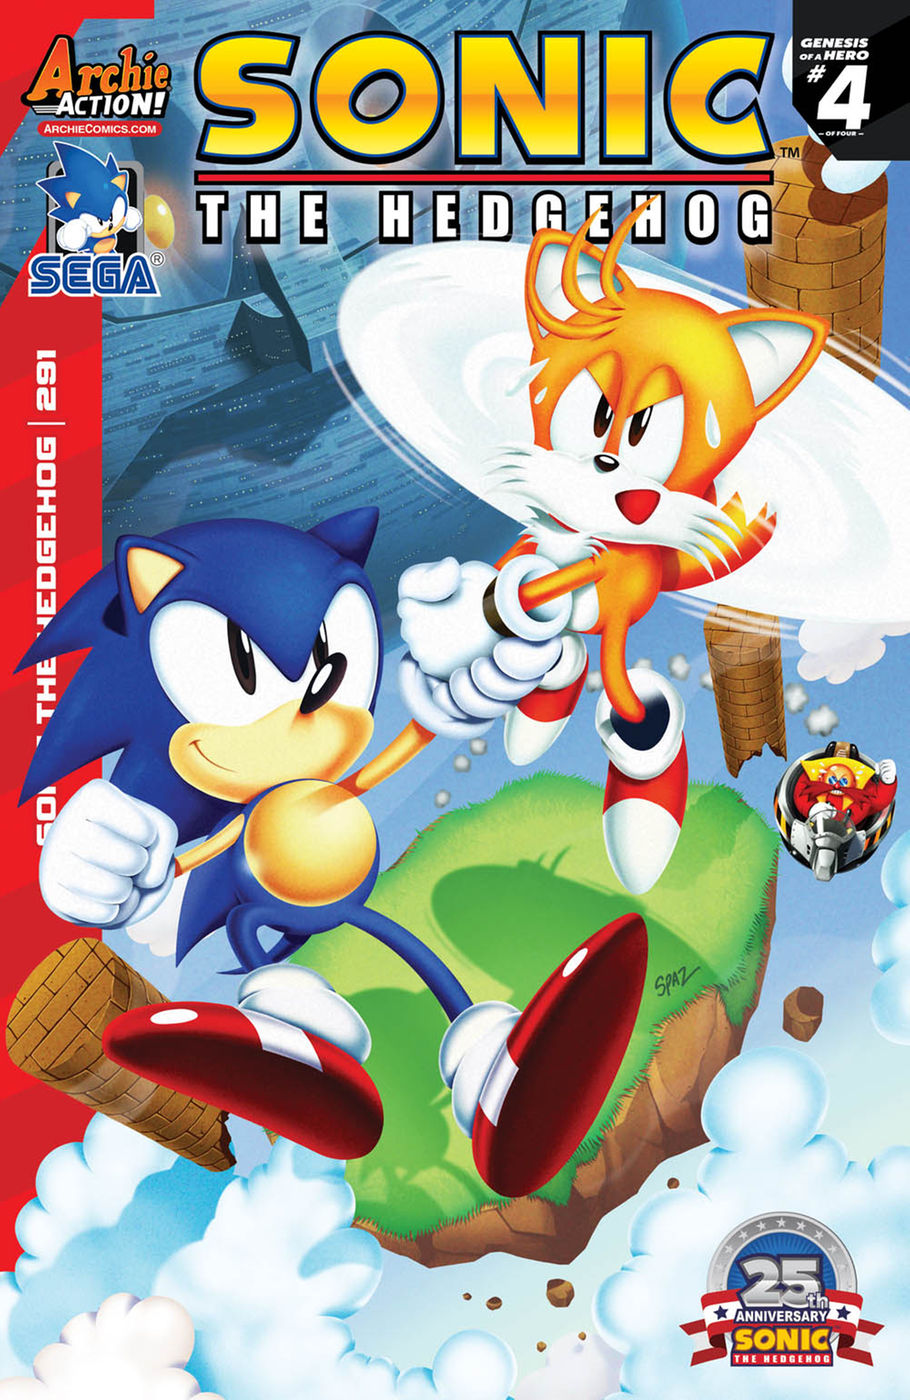 Archie Sonic the Hedgehog Sonic the Hedgehog 56 (Classic Era